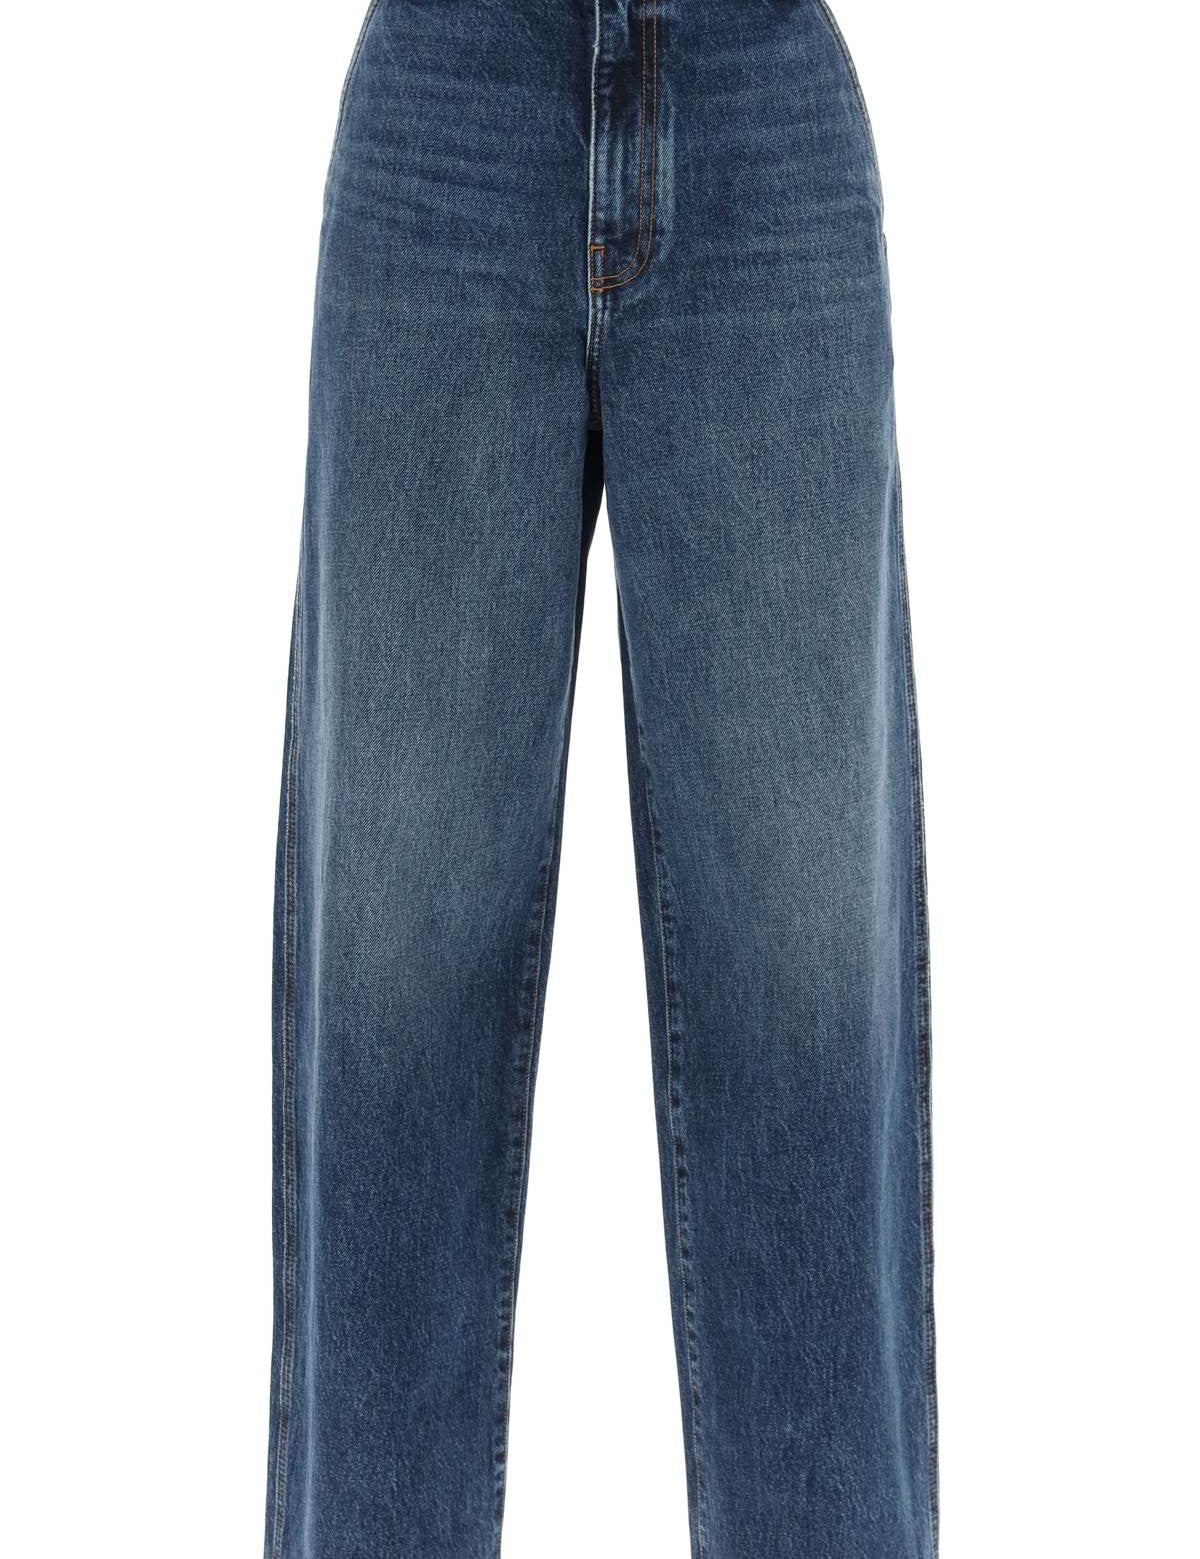 khaite-bacall-wide-leg-jeans.jpg